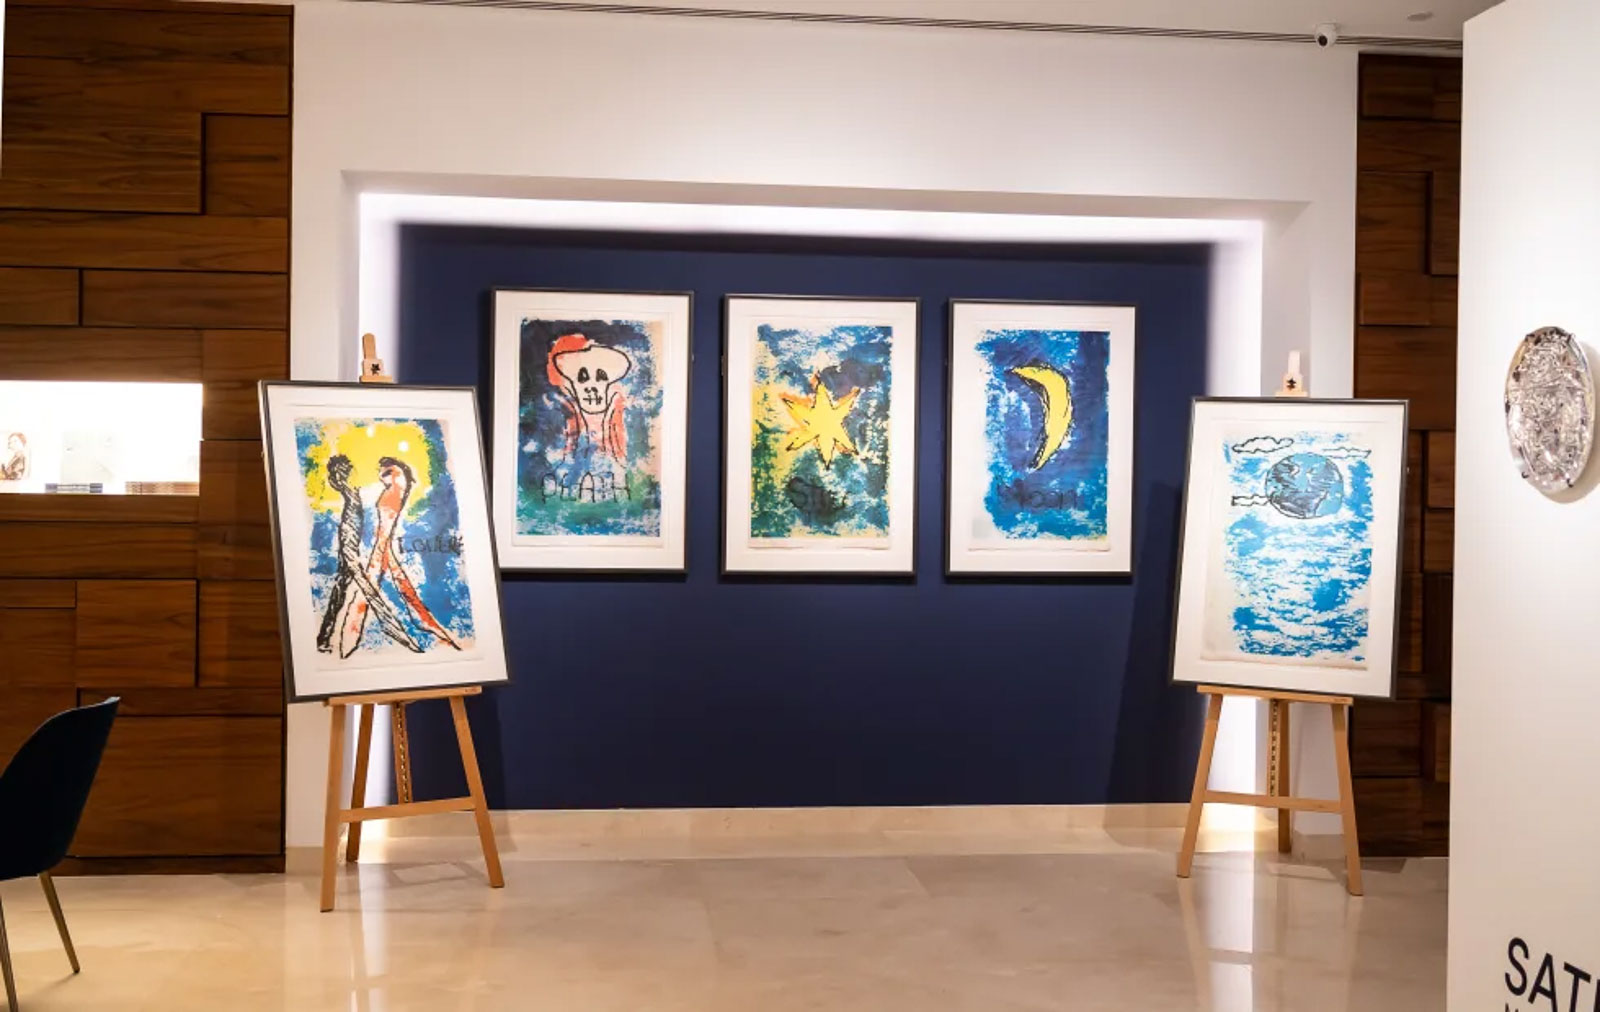 Masterpiece Art Gallery - Satellite 2021 -  London - Dubai